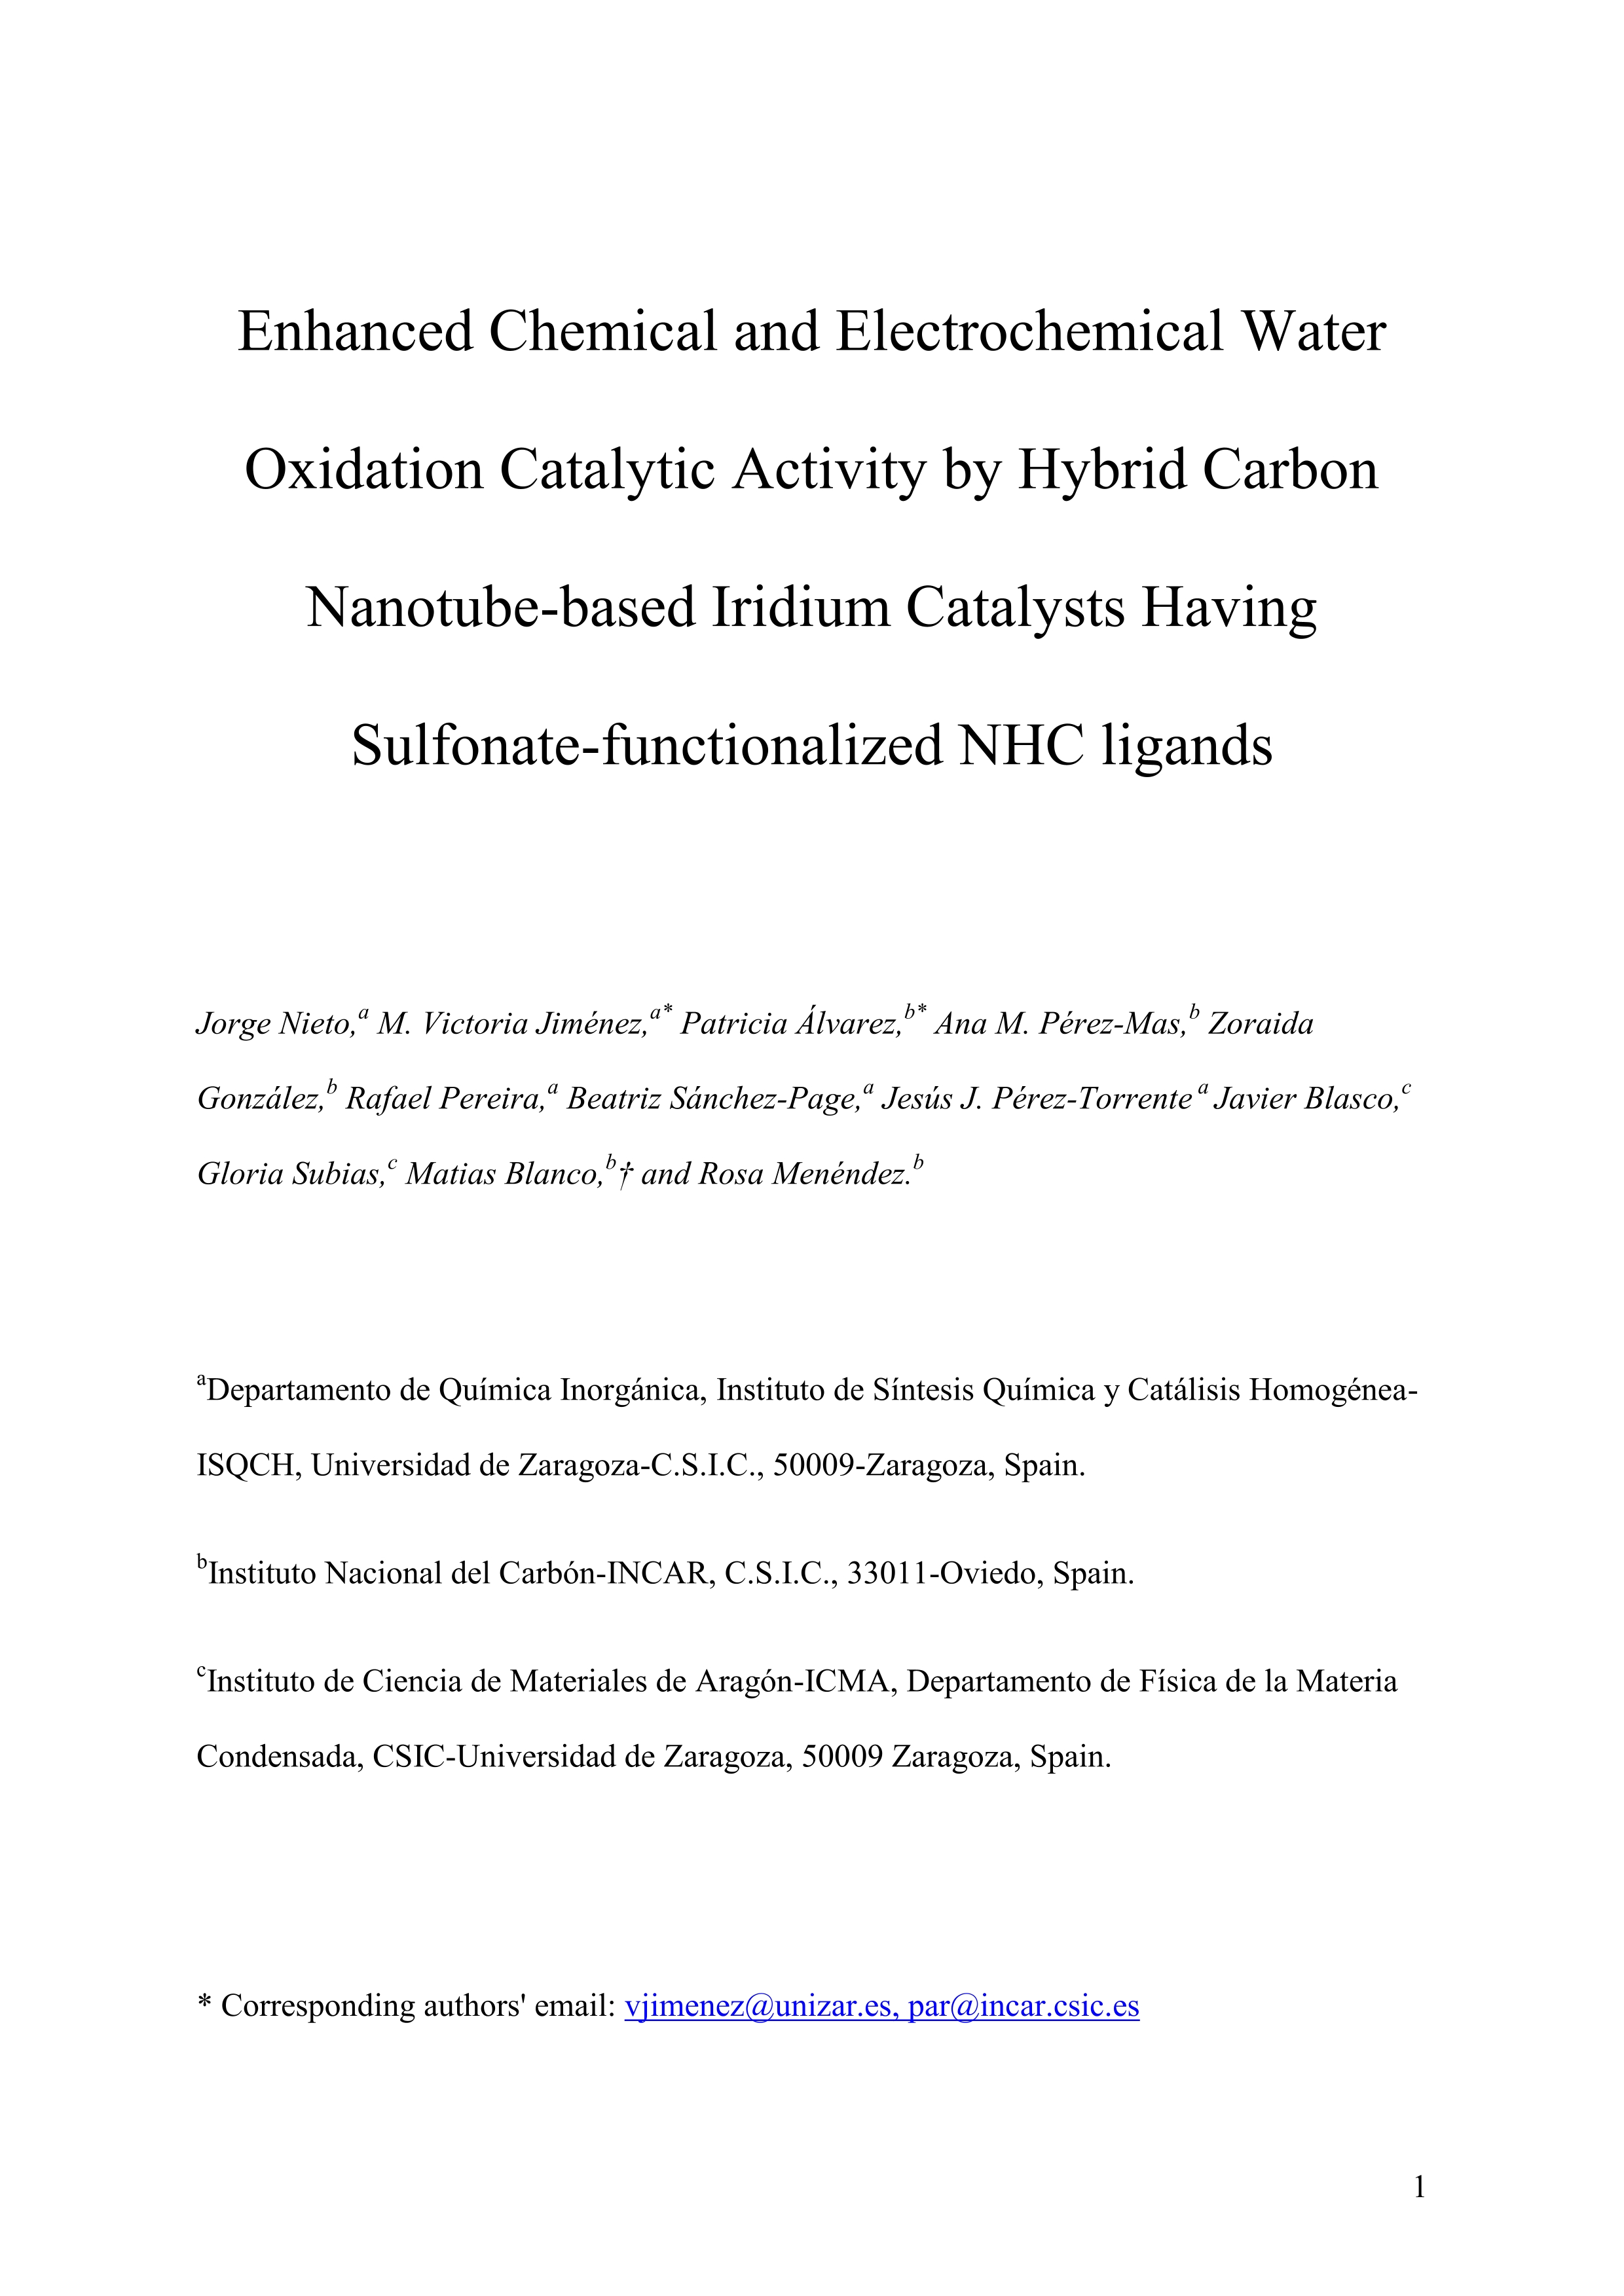 Enhanced Chemical and Electrochemical Water Oxidation Catalytic Activity by Hybrid Carbon Nanotube-Based Iridium Catalysts Having Sulfonate-Functionalized NHC ligands